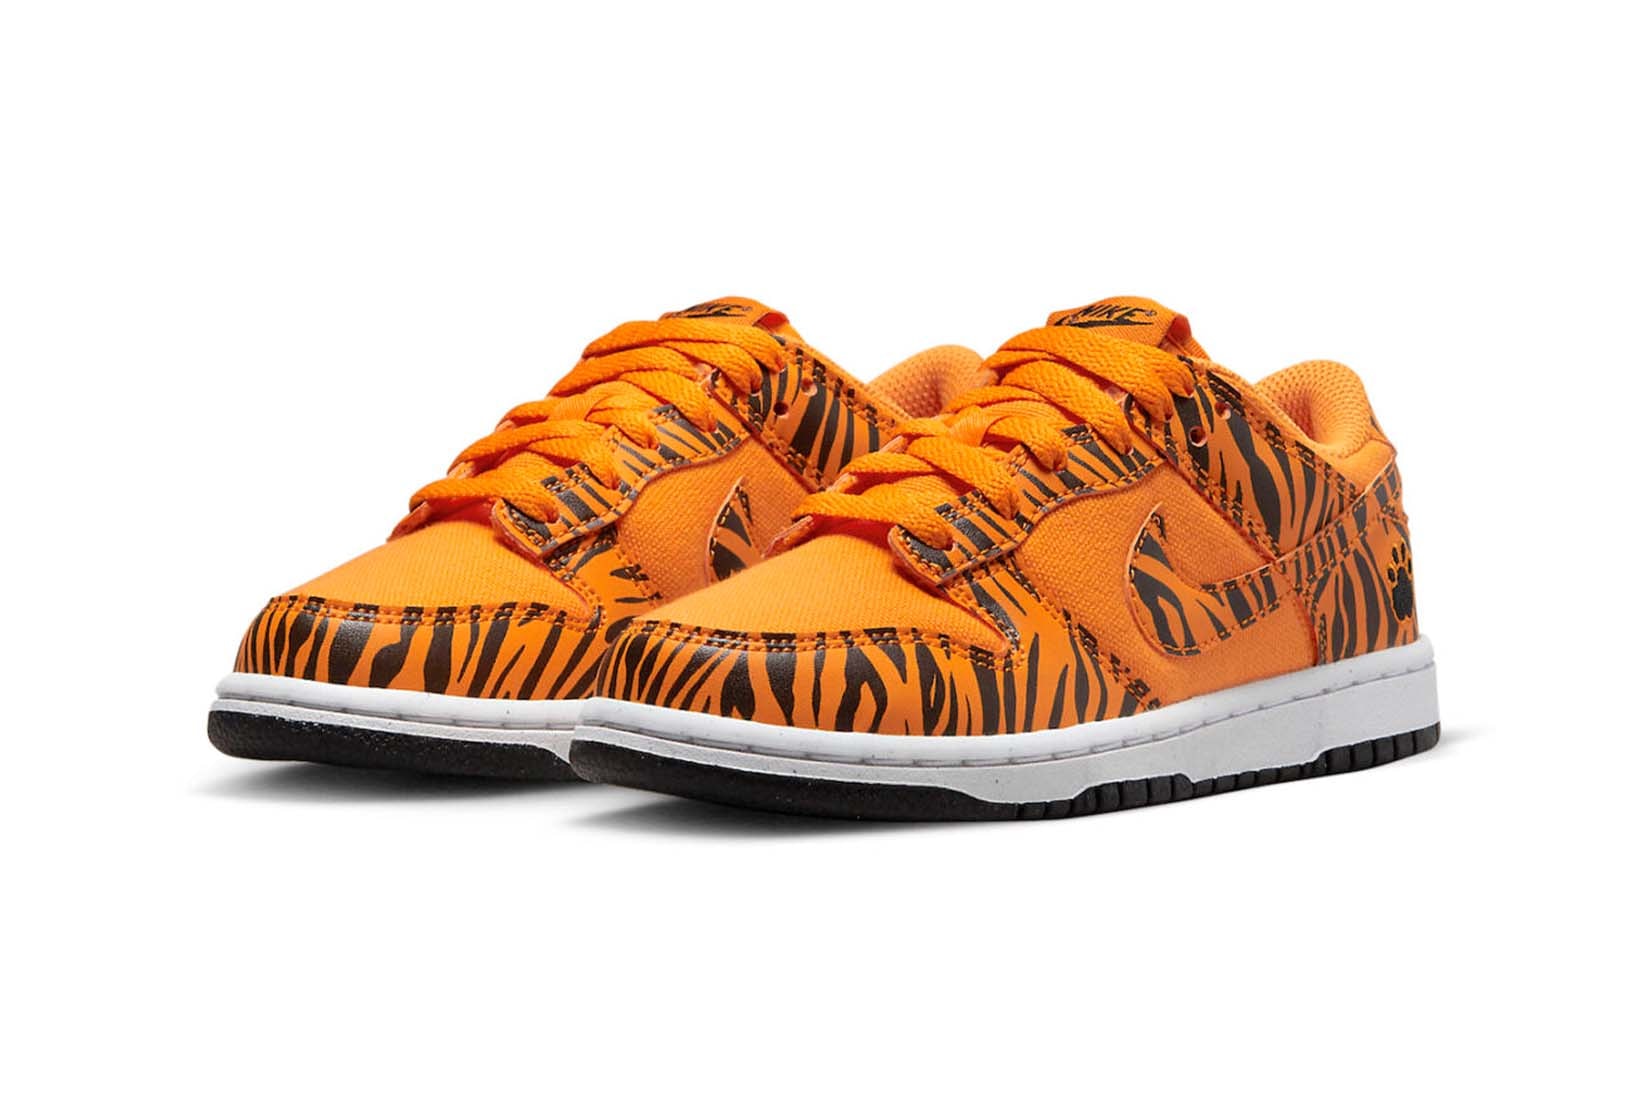 Kids sneaker roundup nike dunk low tiger stripes DZ5633-800 release date